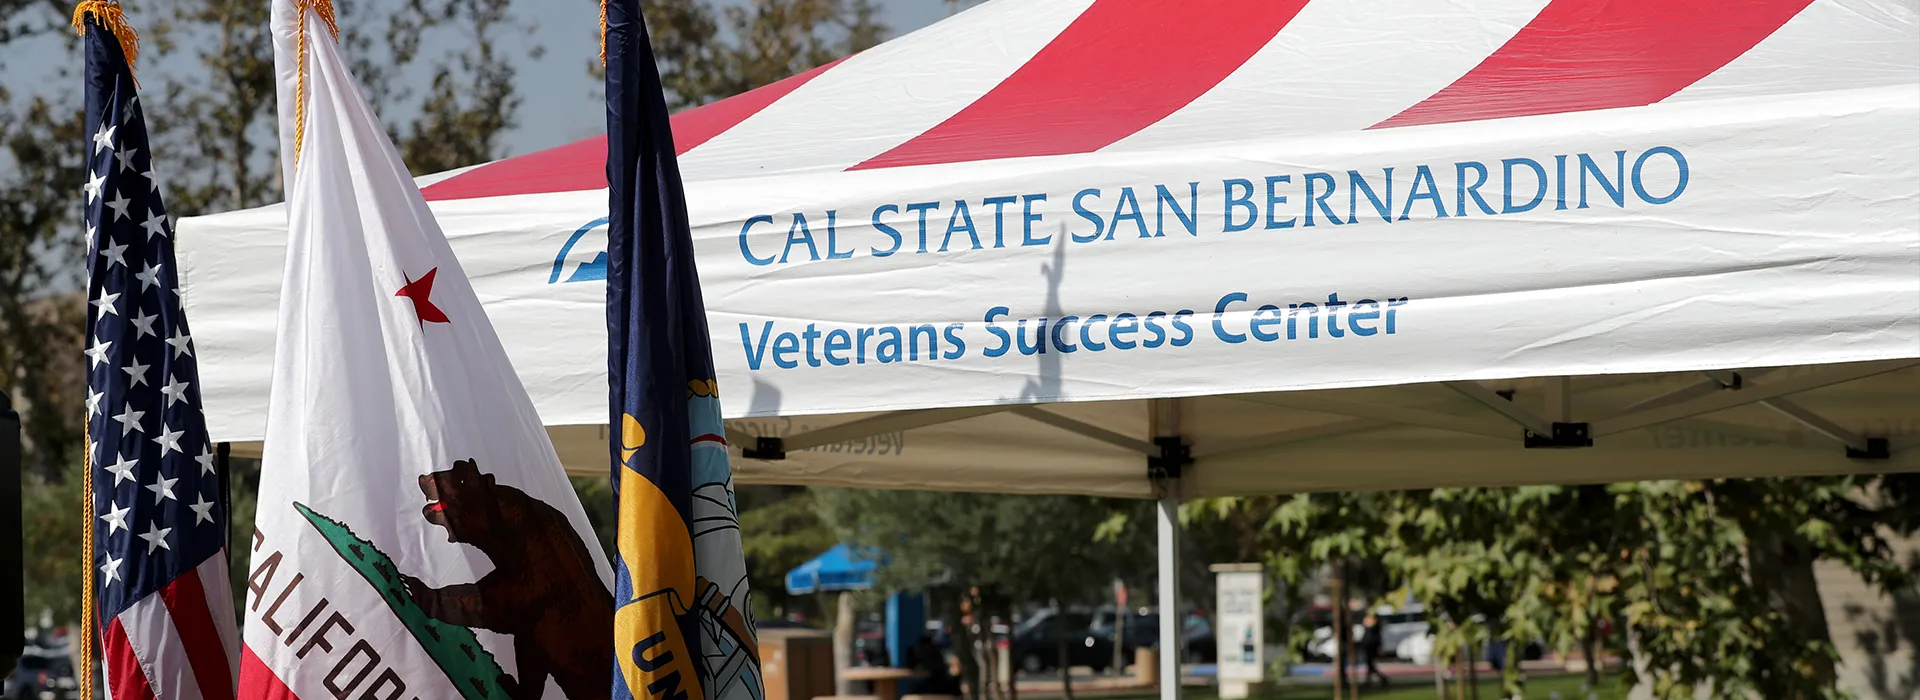 veteran success center tent